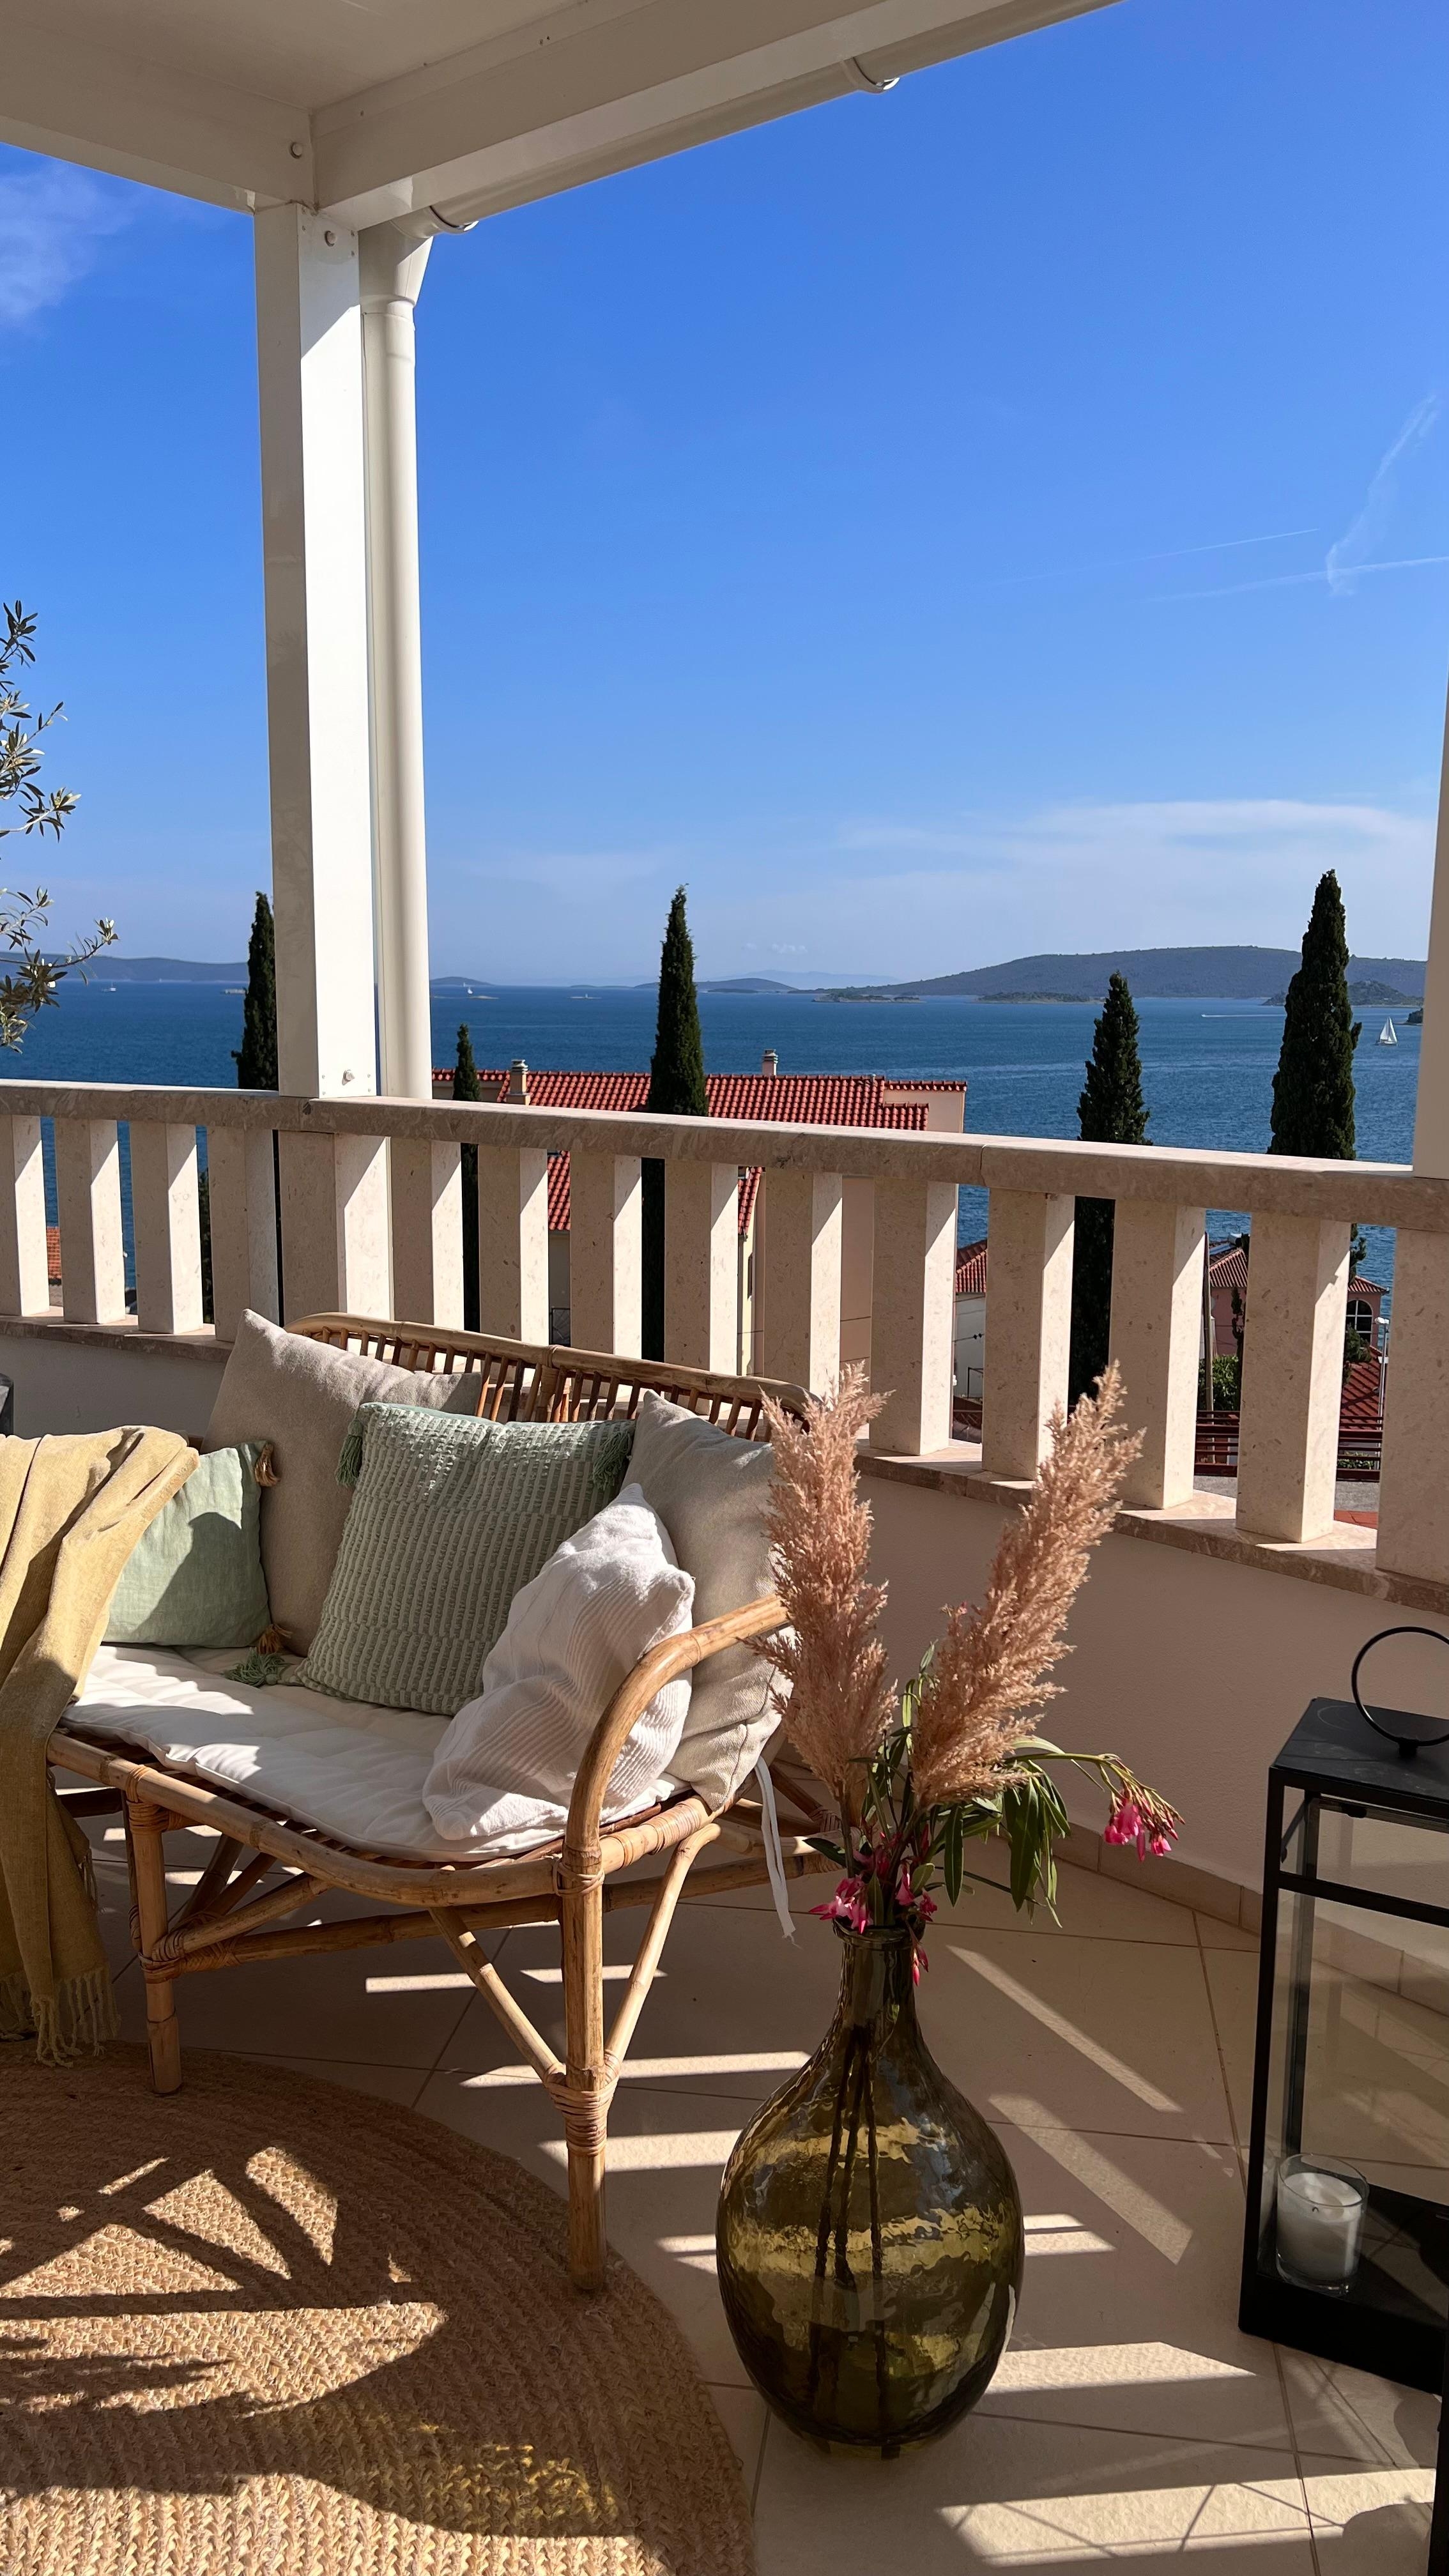 Ausblick aufs Meer 
#couchliebt #ausblick #terrasse #solebich #zuhauseammeer